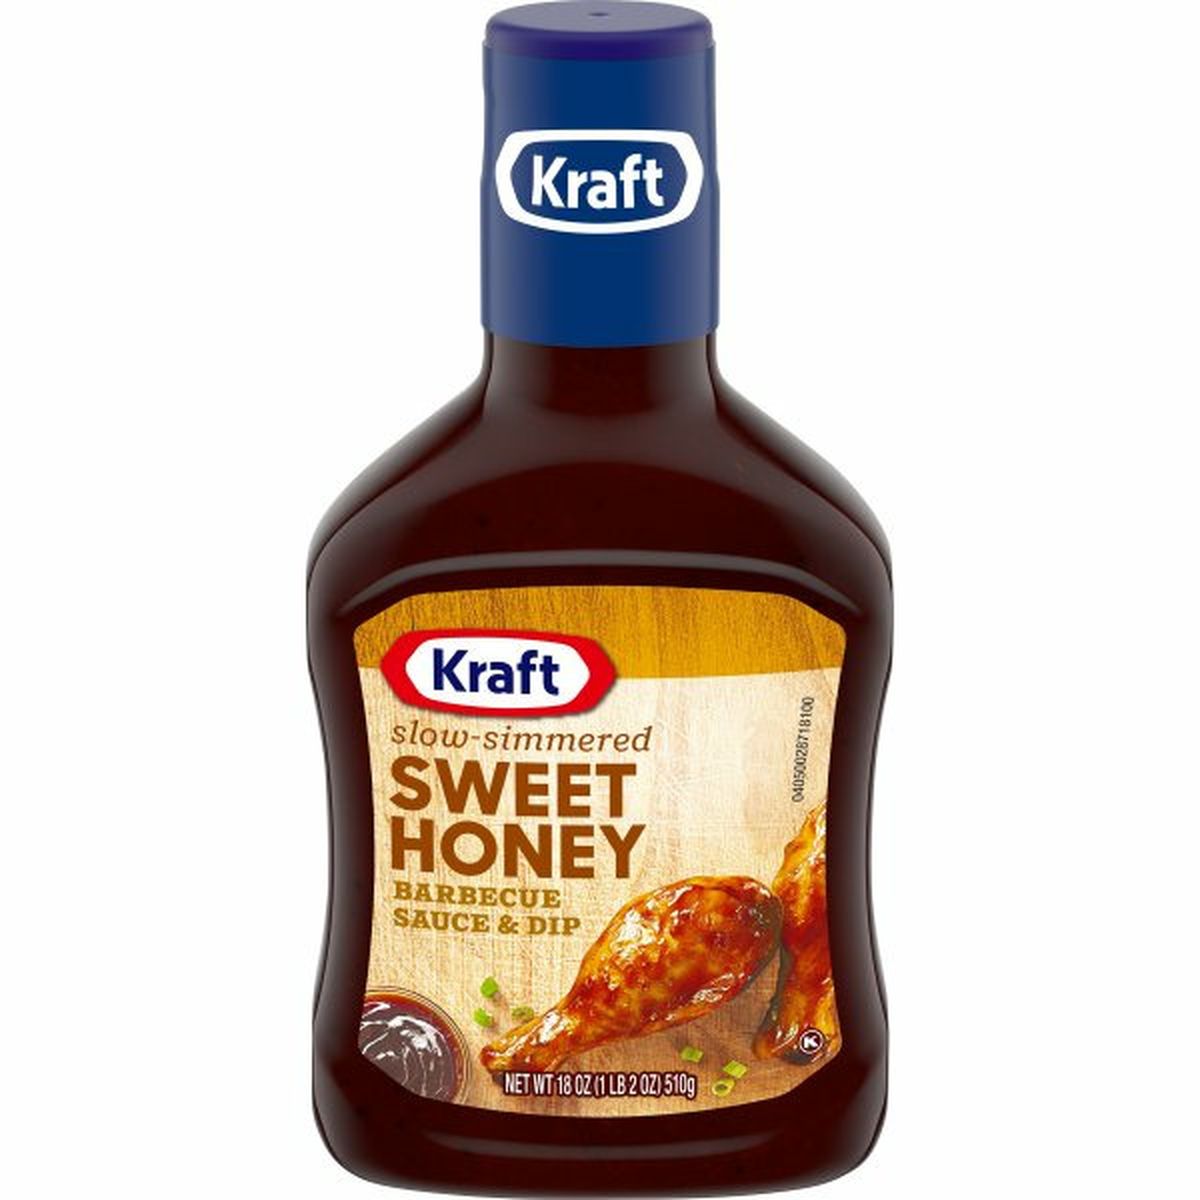 Calories in Kraft Sweet Honey Barbecue Sauce